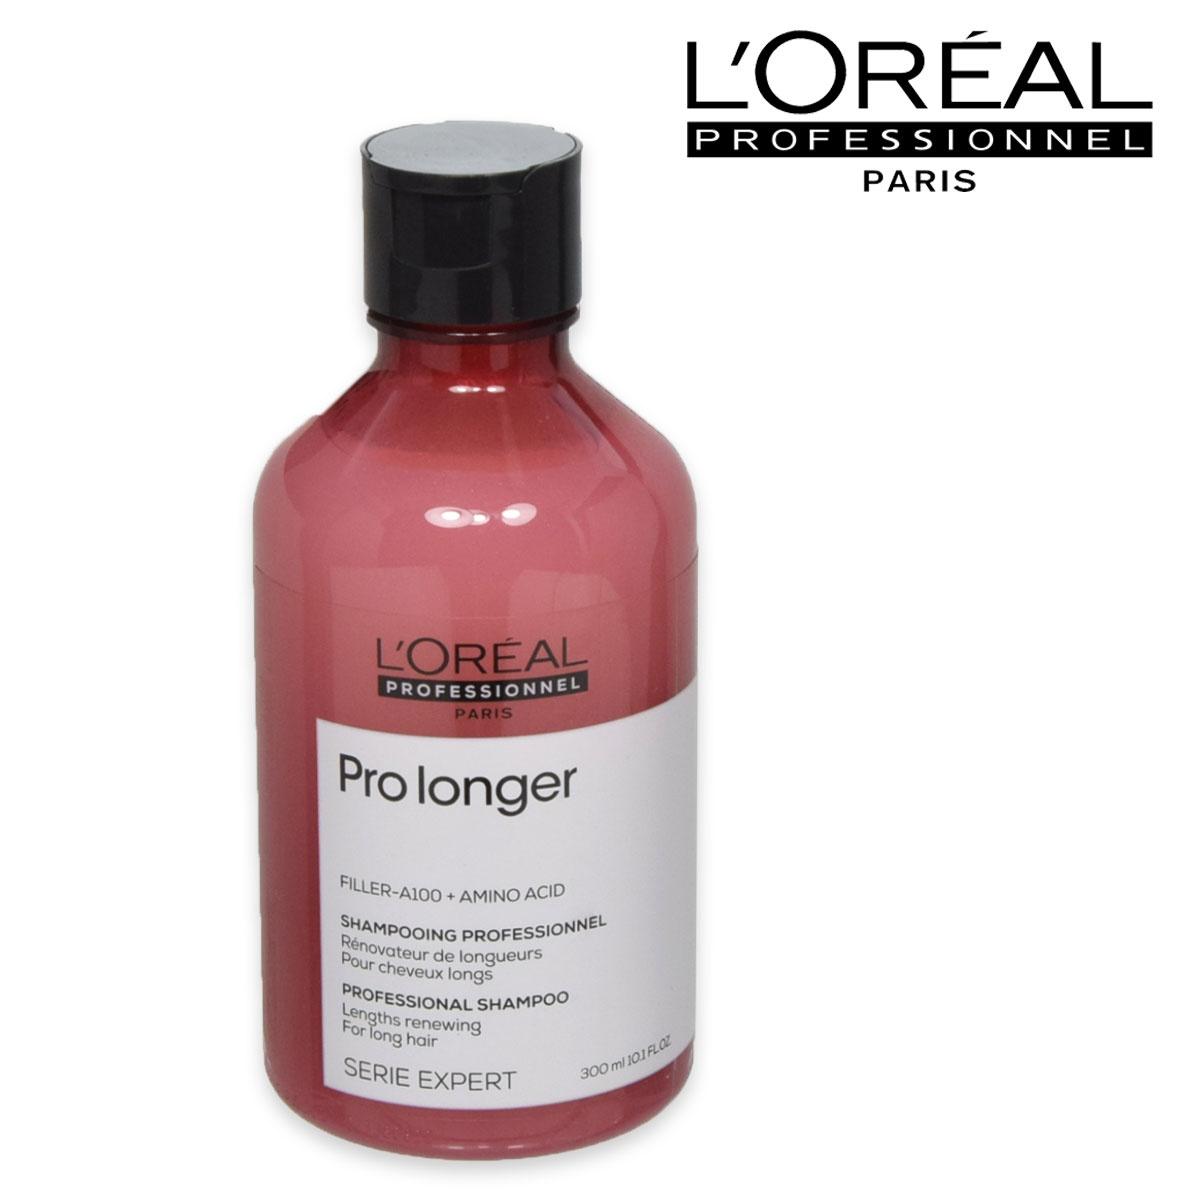 L'oreal pro longer shampoo 300 ml